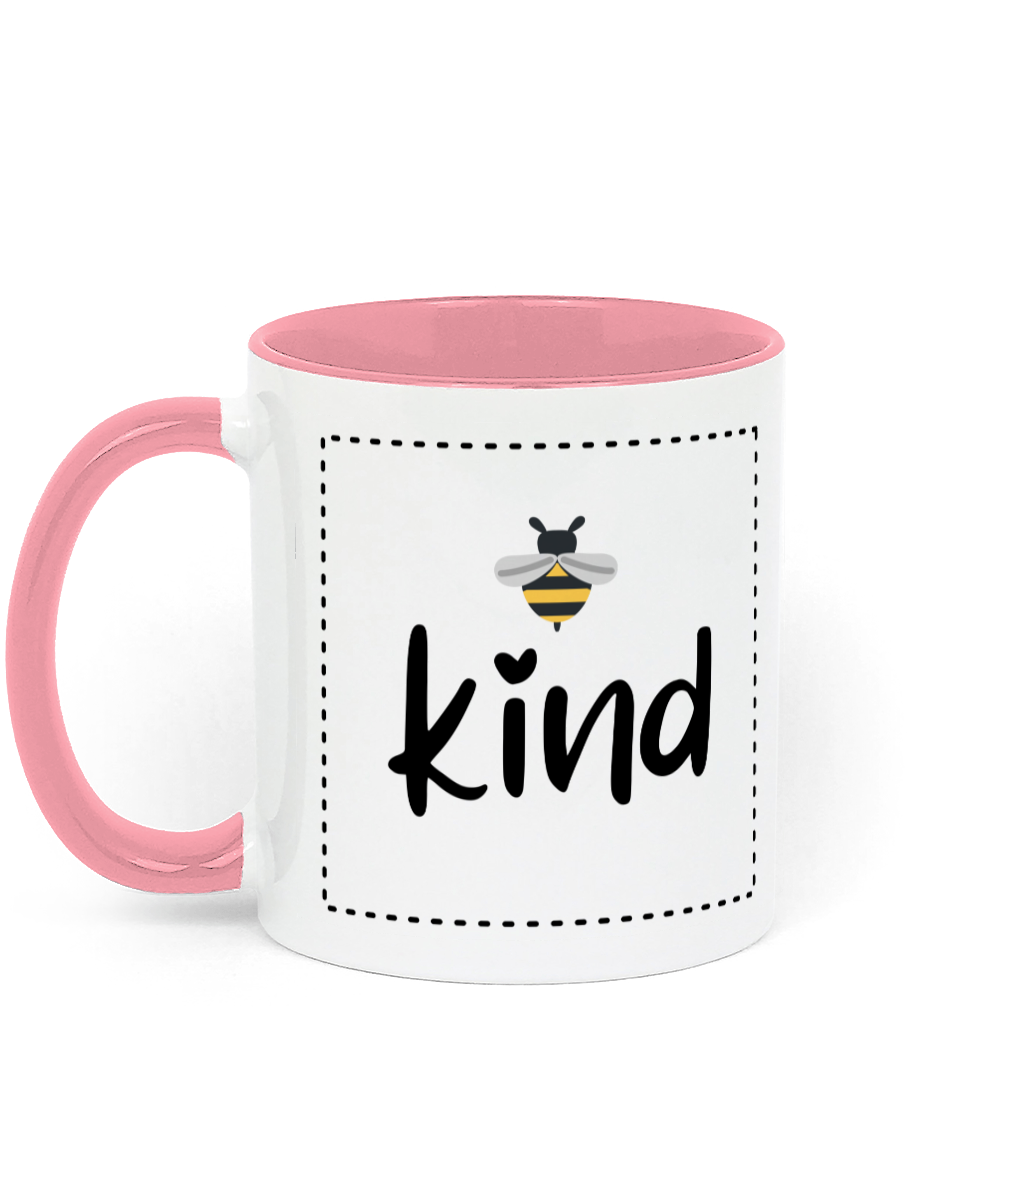 Be Kind Mug.11 oz mug. Daily Affirmations, Motivation, Inspiration. Perfect Gift. Two-toned. Pink.